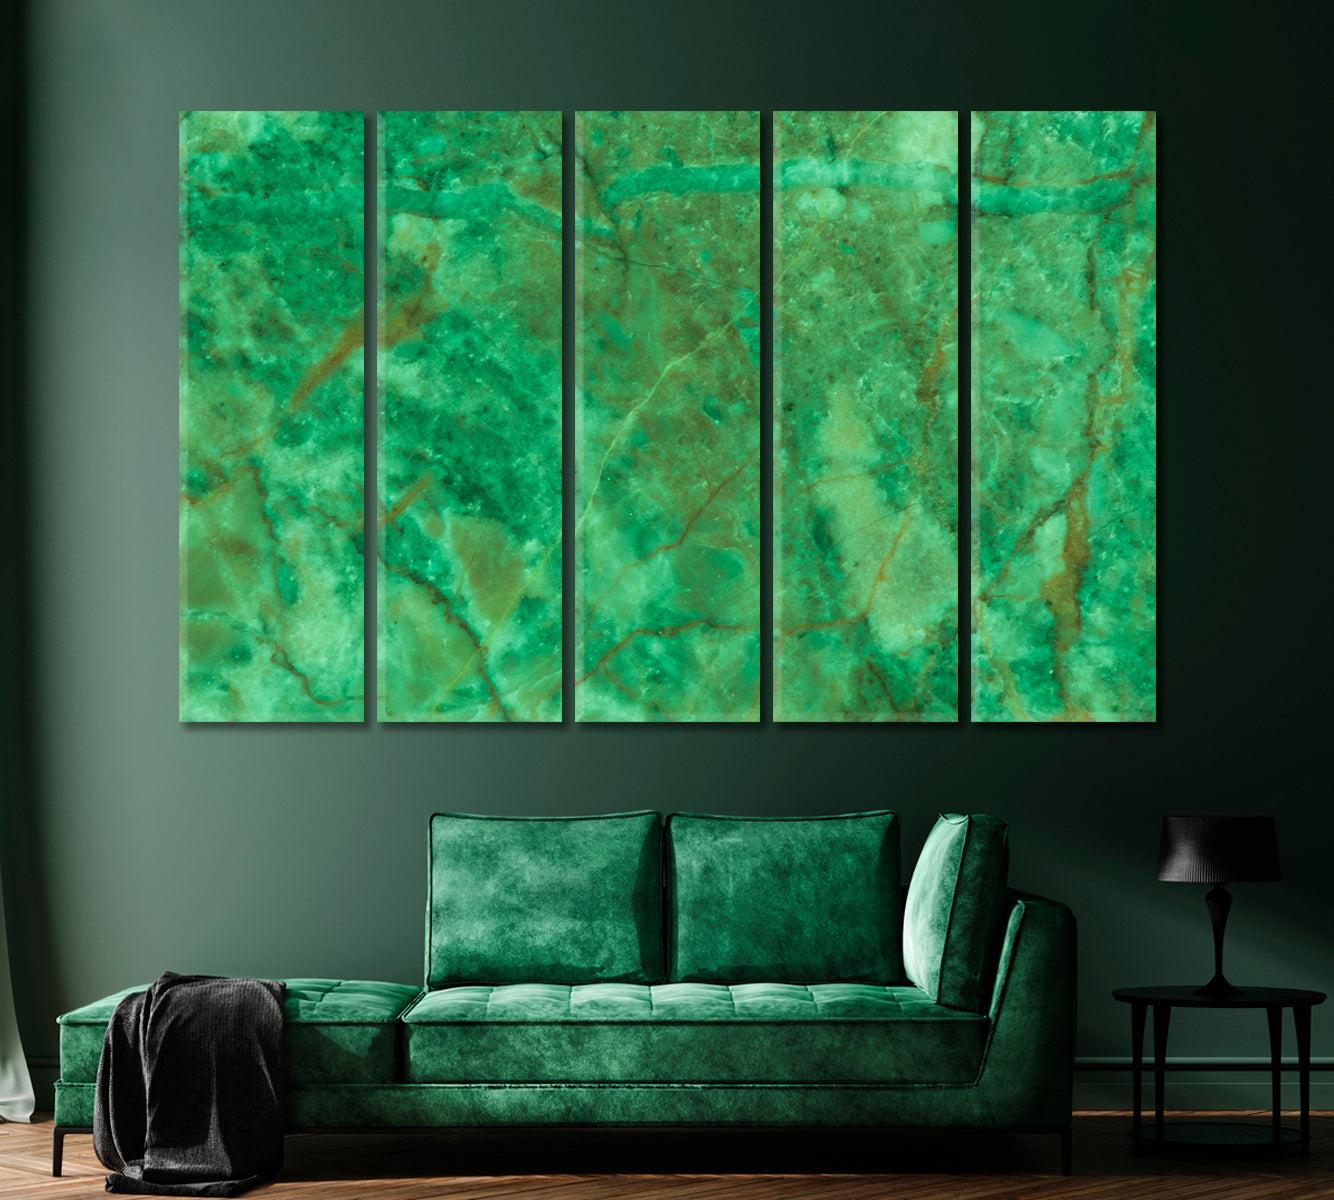 Green Marble Stone Wall Canvas Print-Canvas Print-CetArt-1 Panel-24x16 inches-CetArt